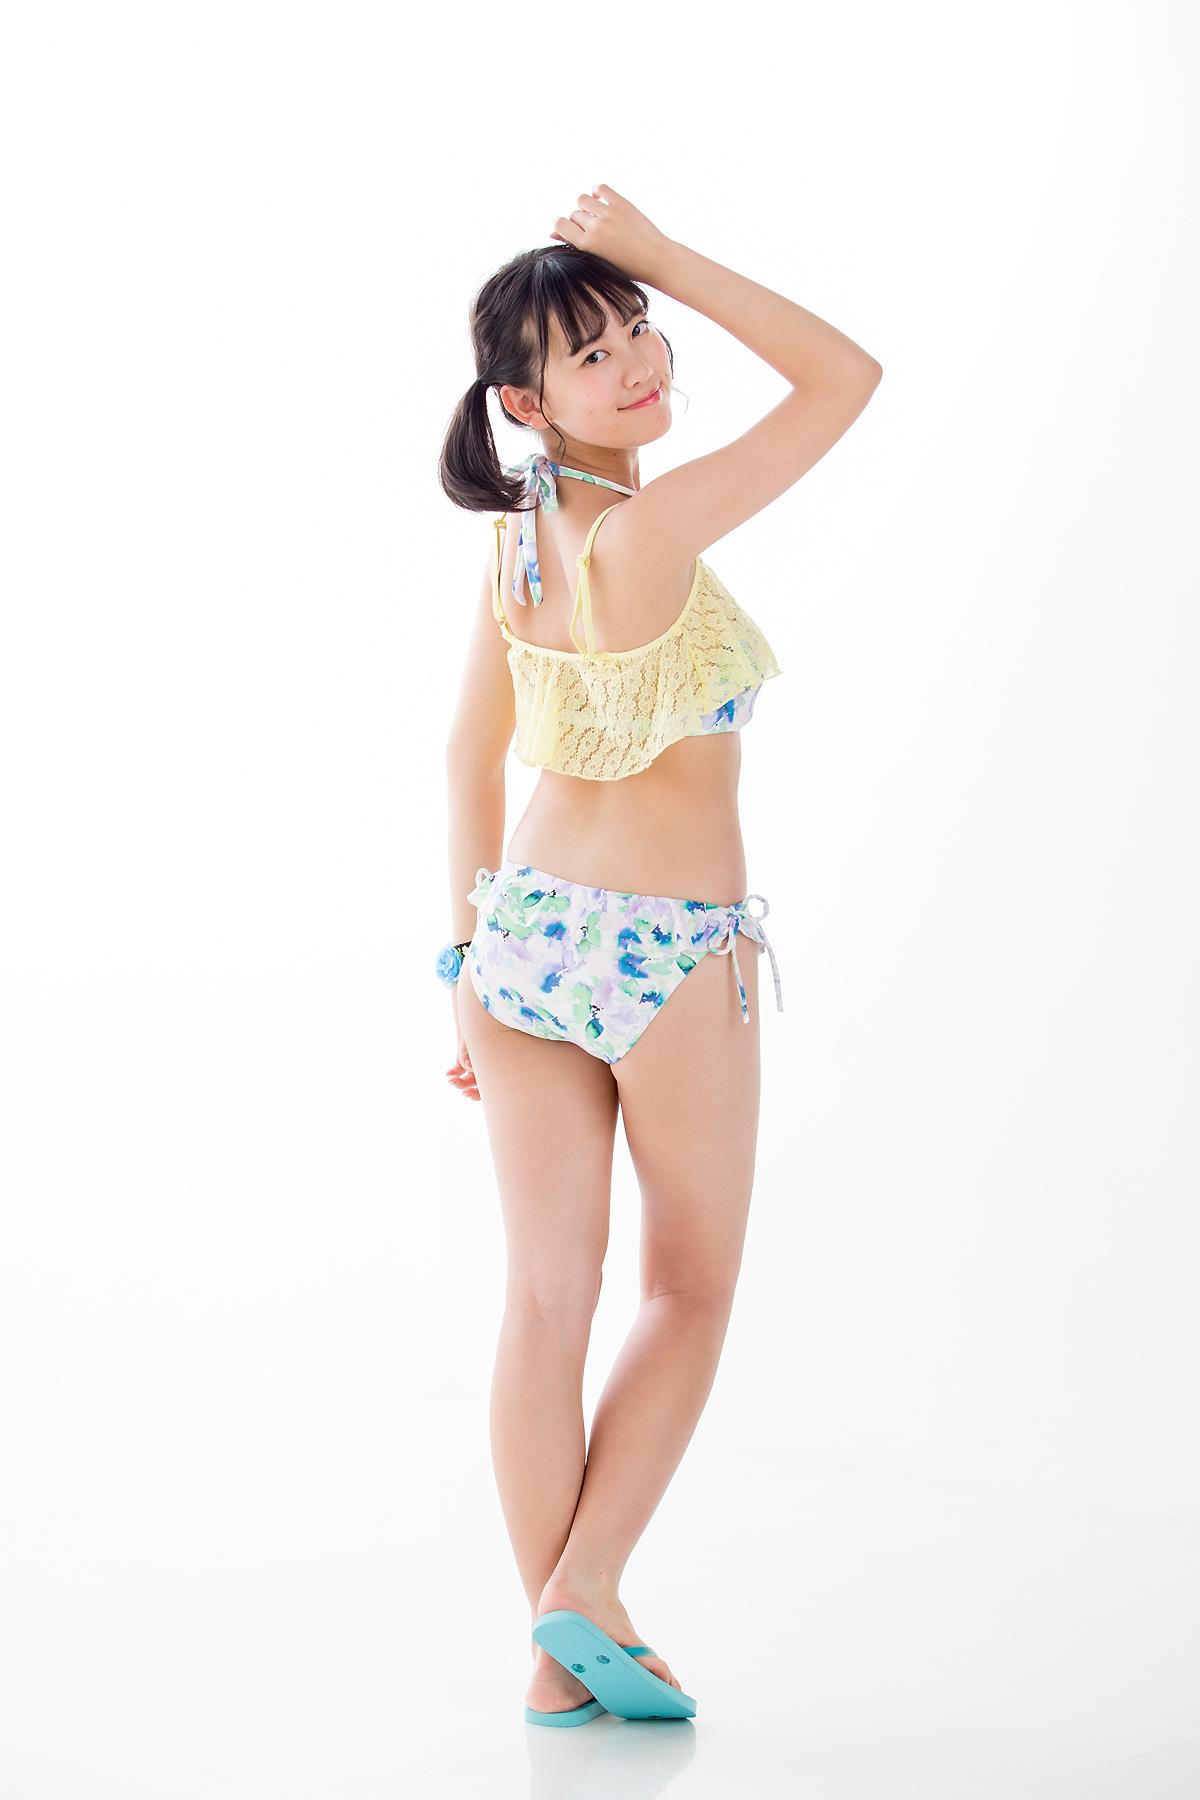 Minisuka.tv Sarina Kashiwagi 柏木さりな Premium Gallery 2.8 - 5.jpg